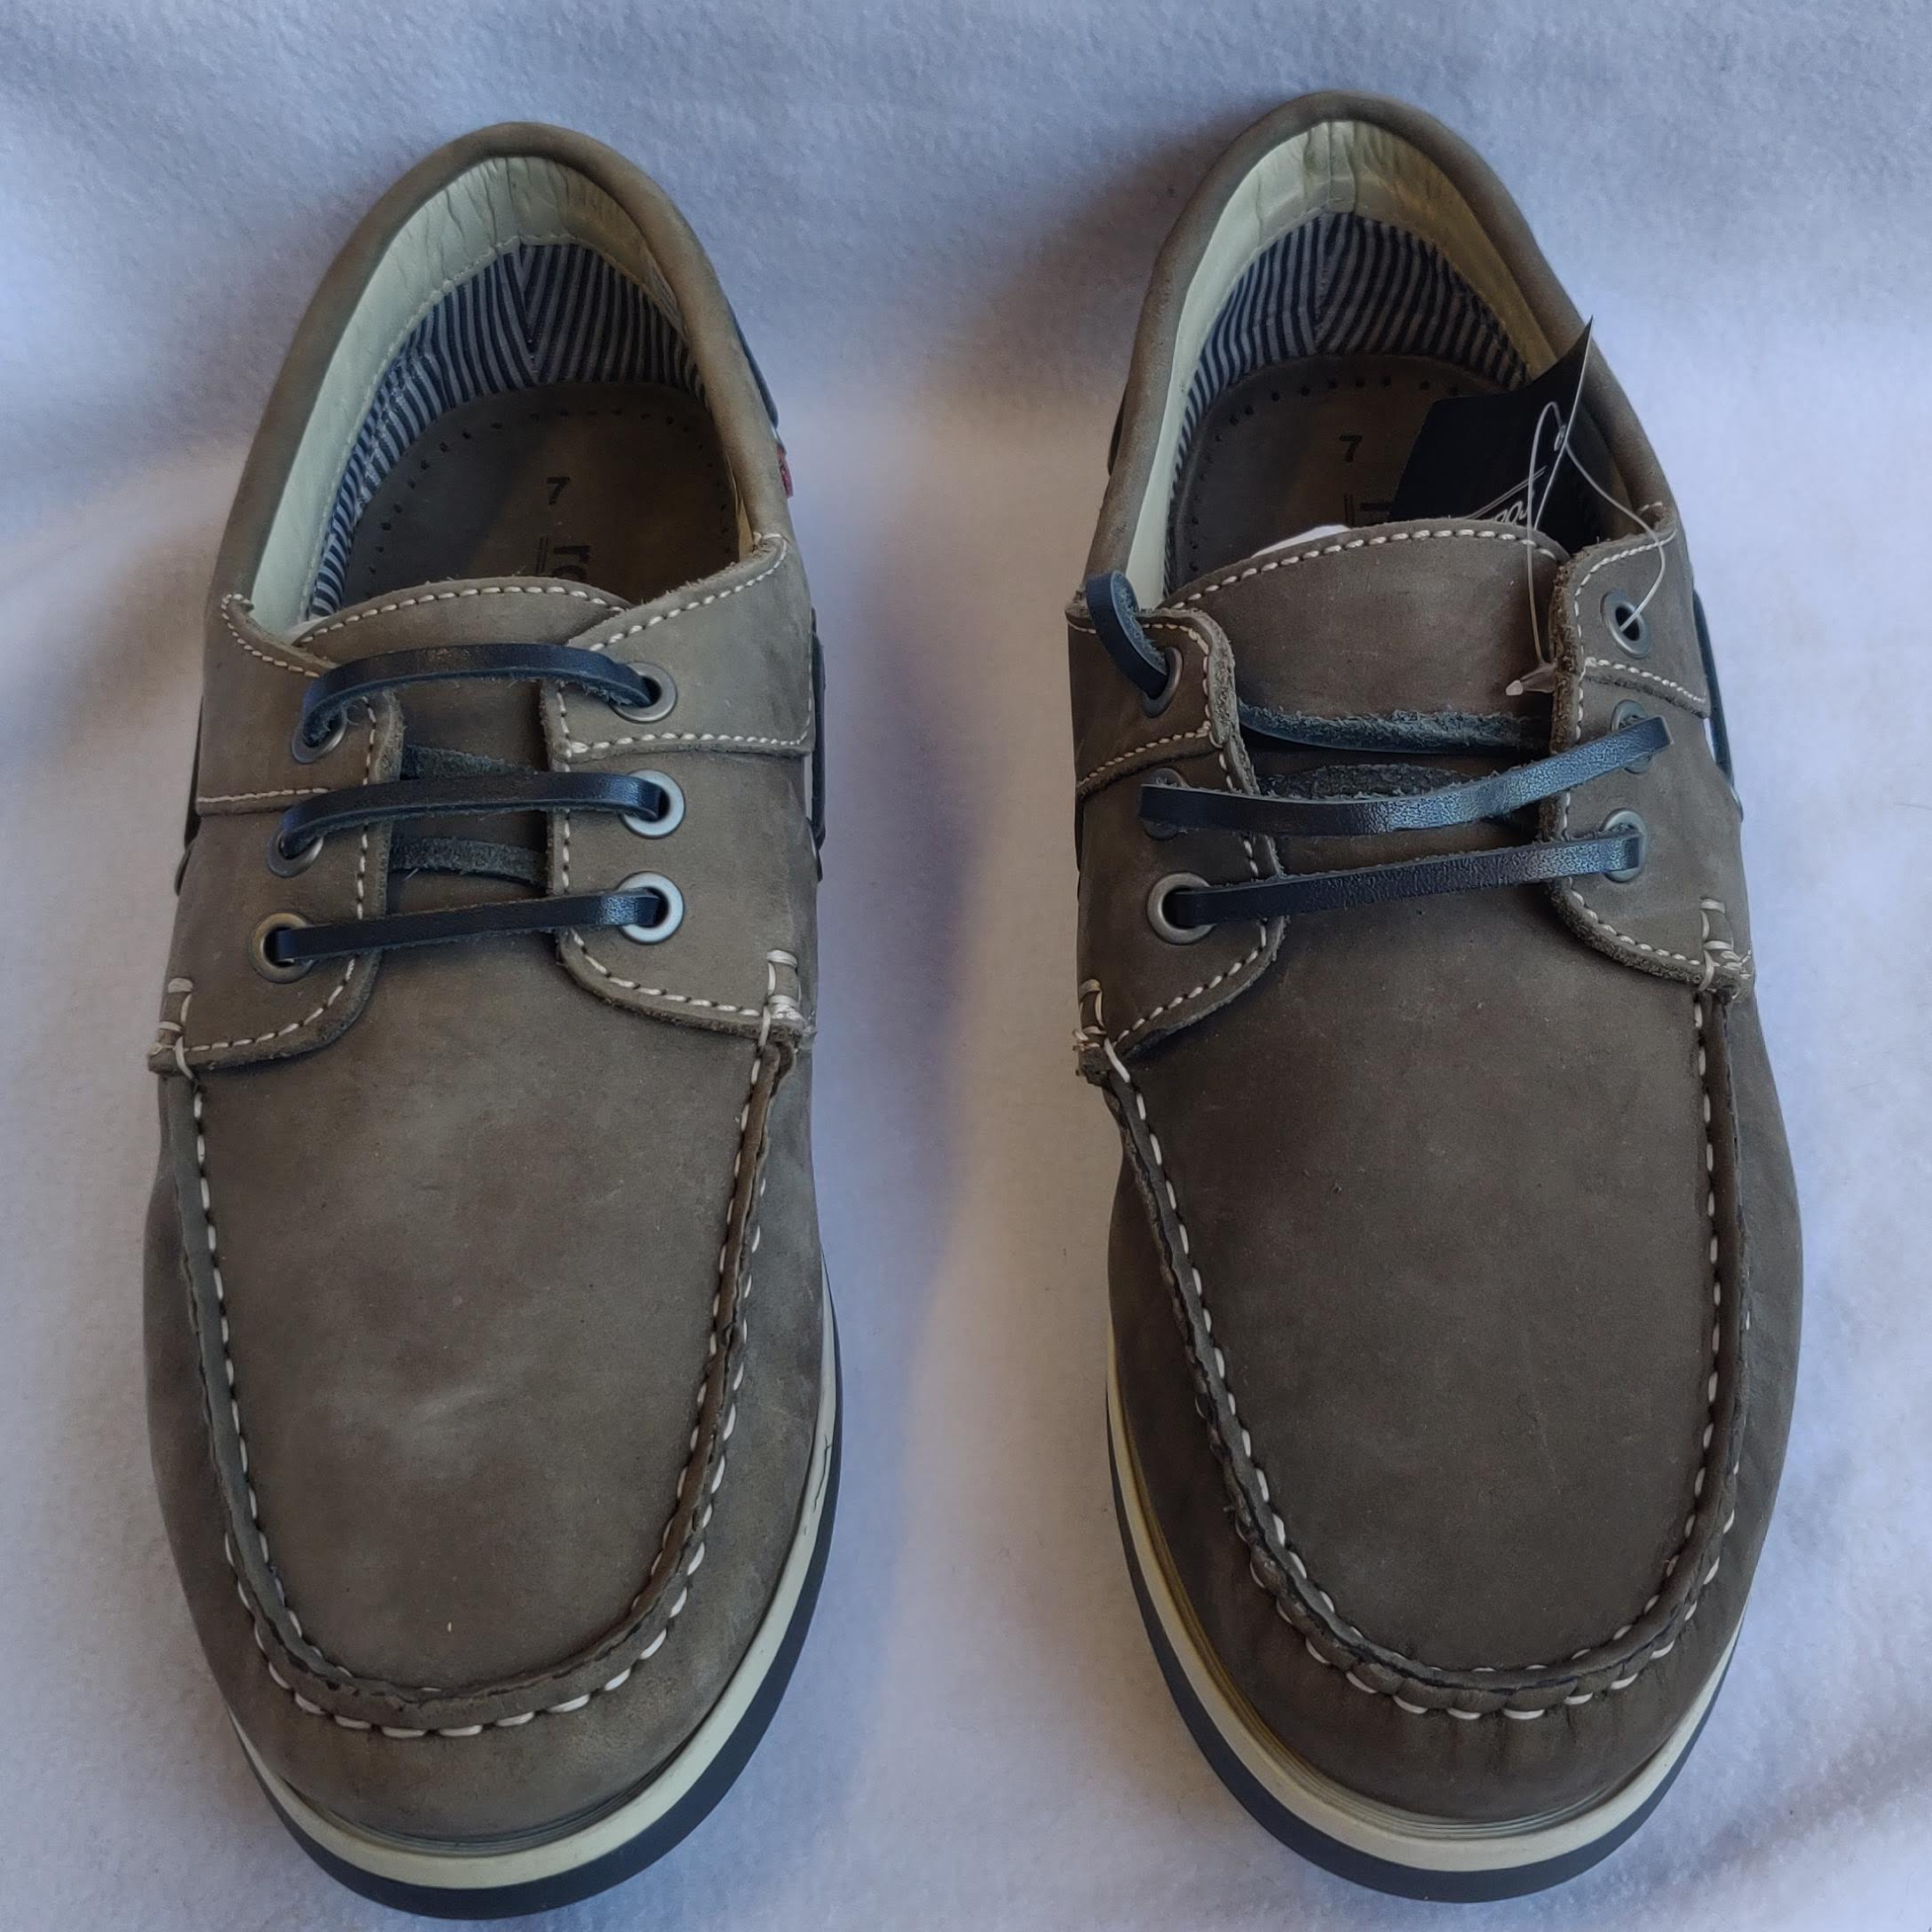 Gents Roamers Grey Nubuck Deck Shoes